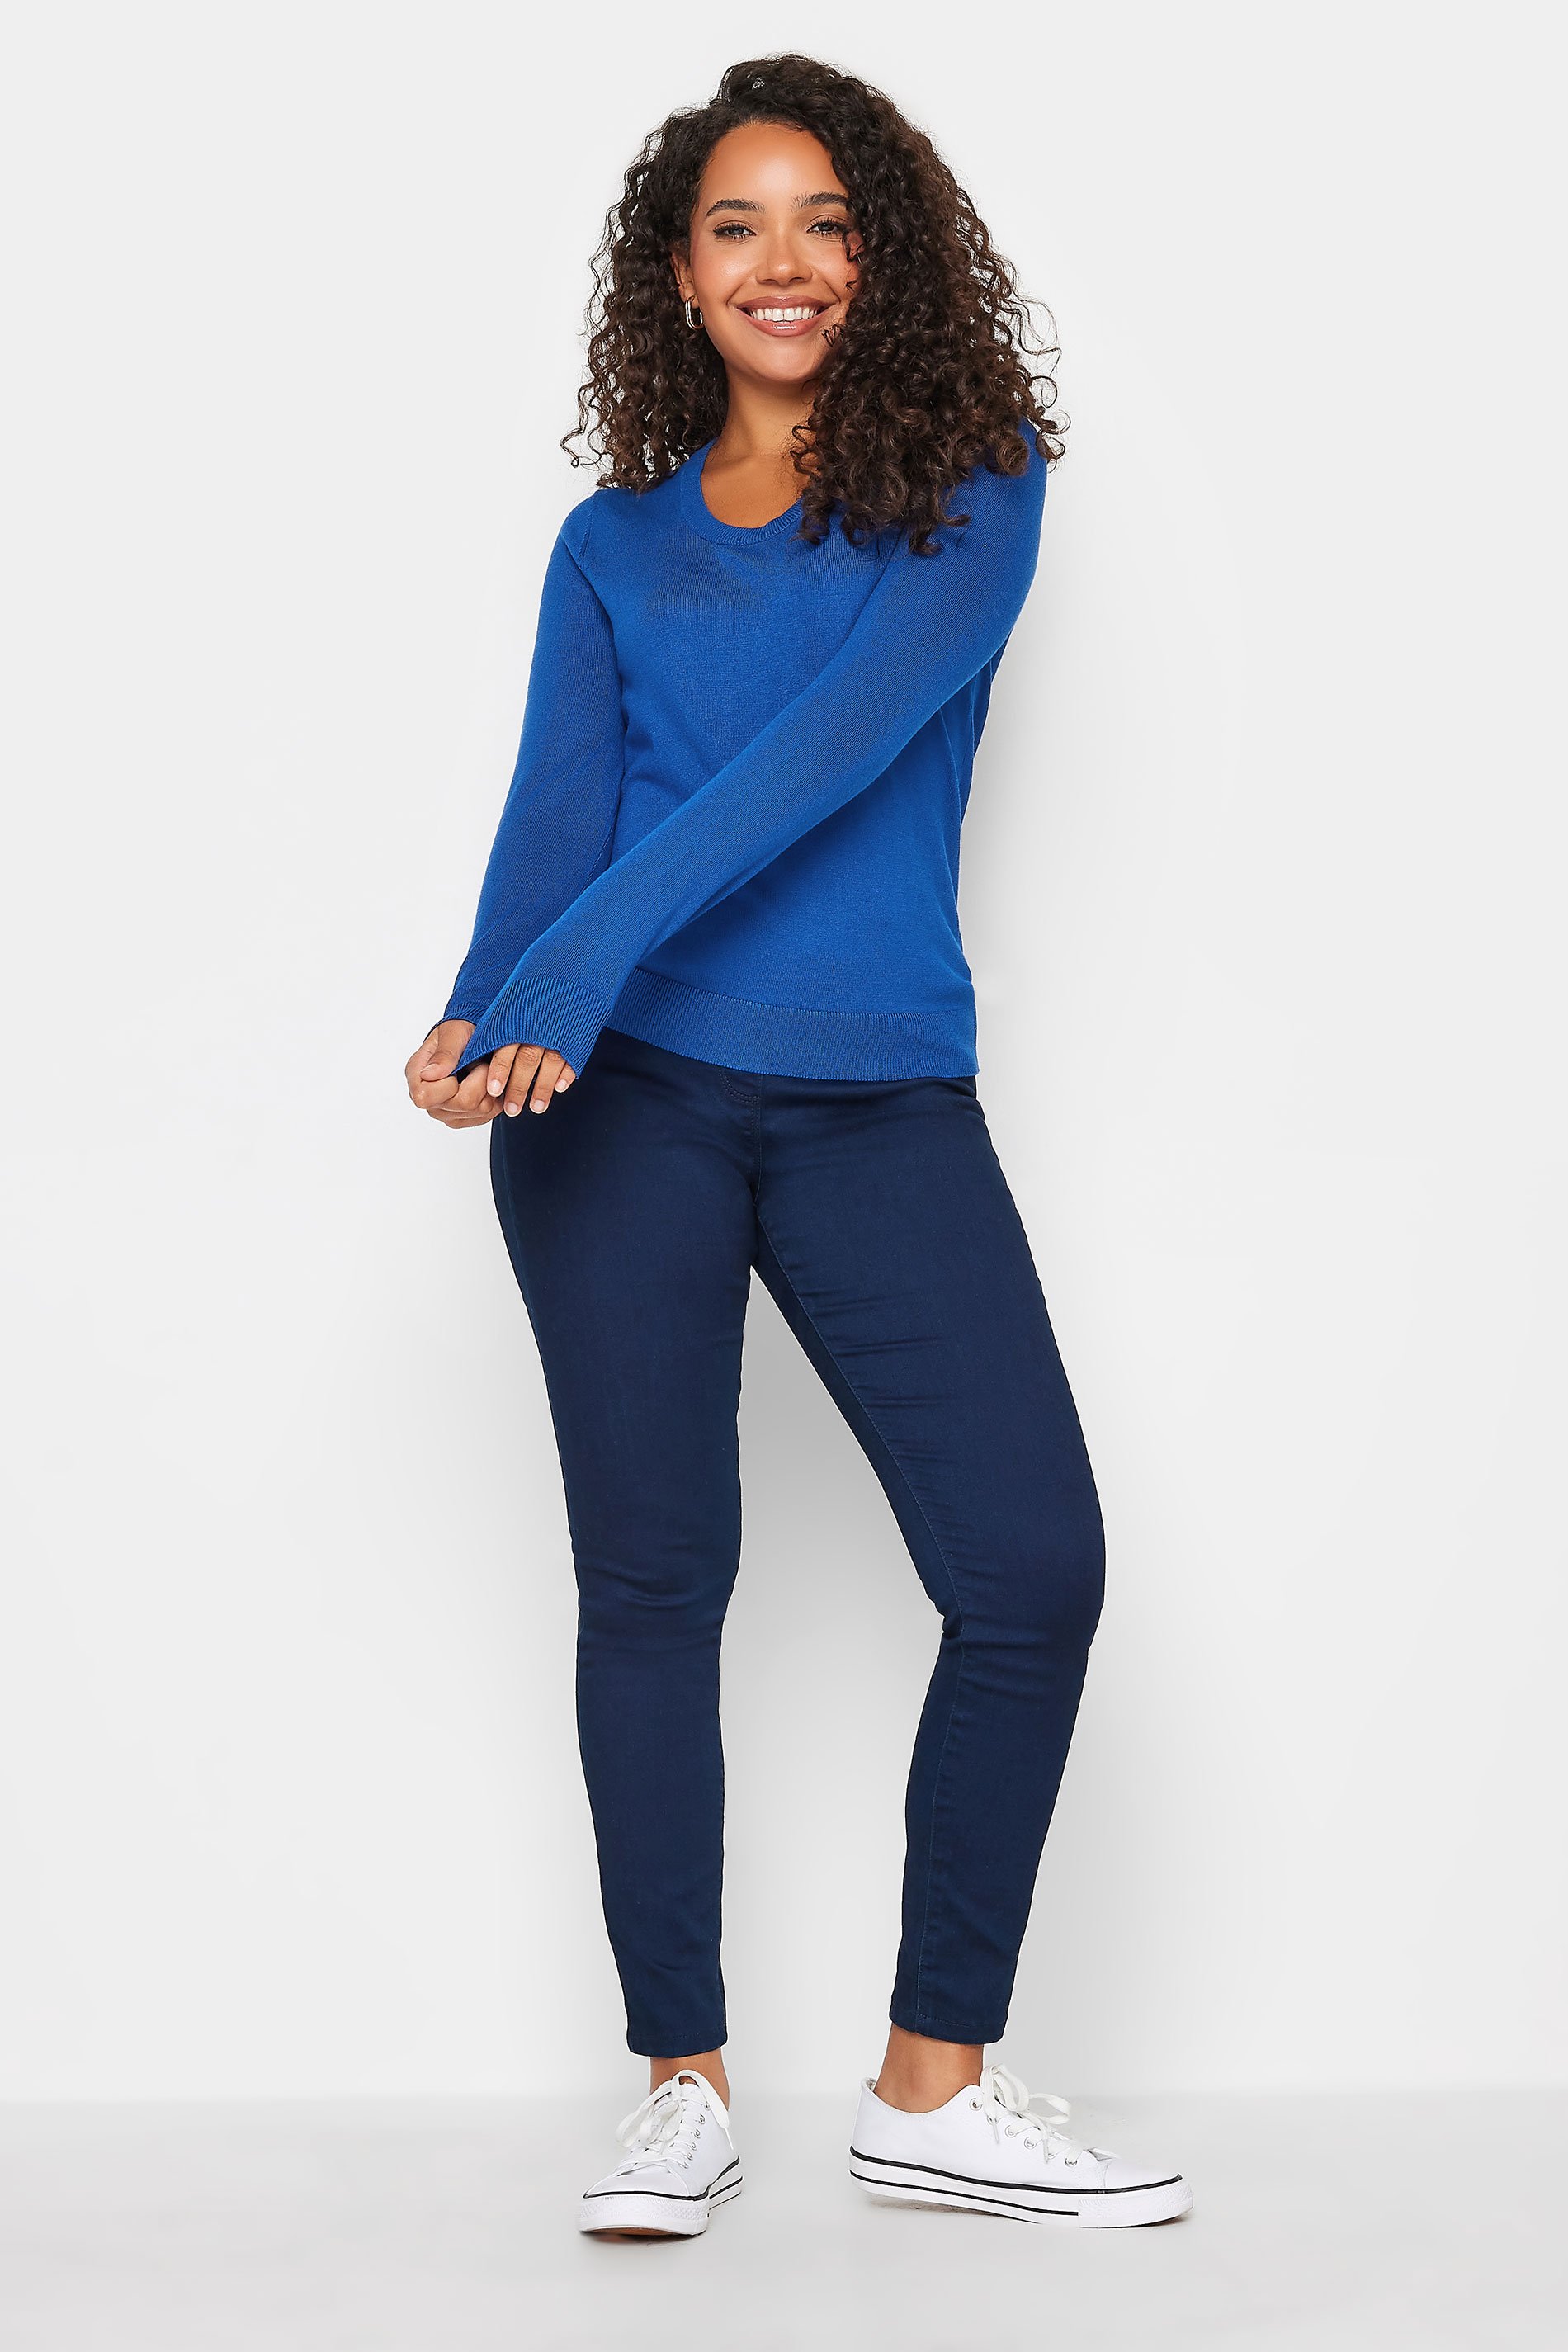 M&Co Blue Long Sleeve Knit Jumper | M&Co